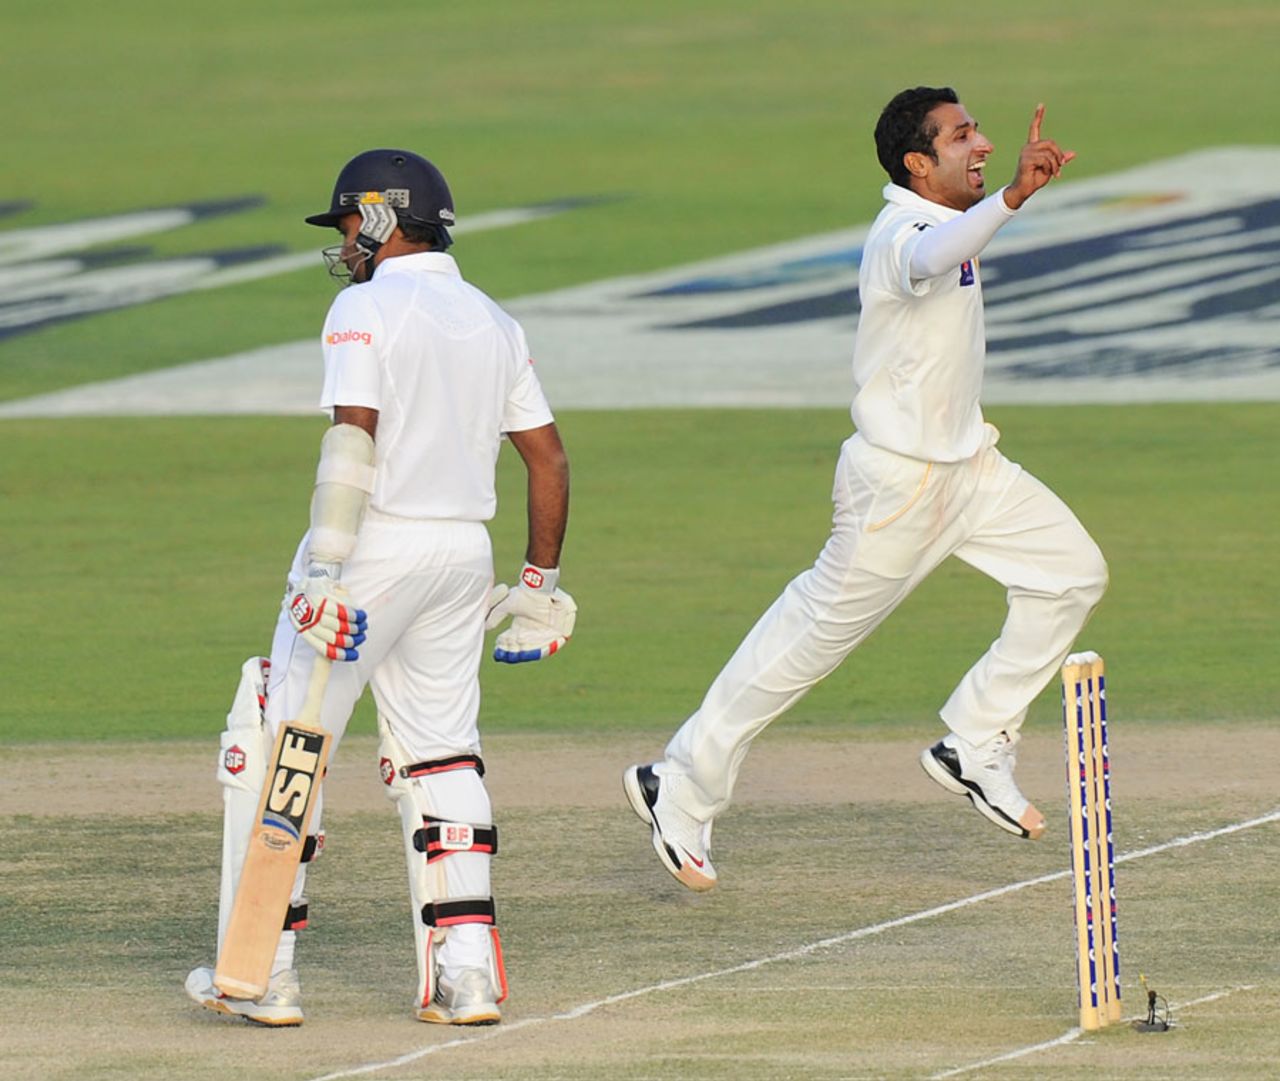 Bilawal Bhatti picked up two wickets in two balls, Pakistan v Sri Lanka, 1st Test, Abu Dhabi, 3rd day, January 2, 2014